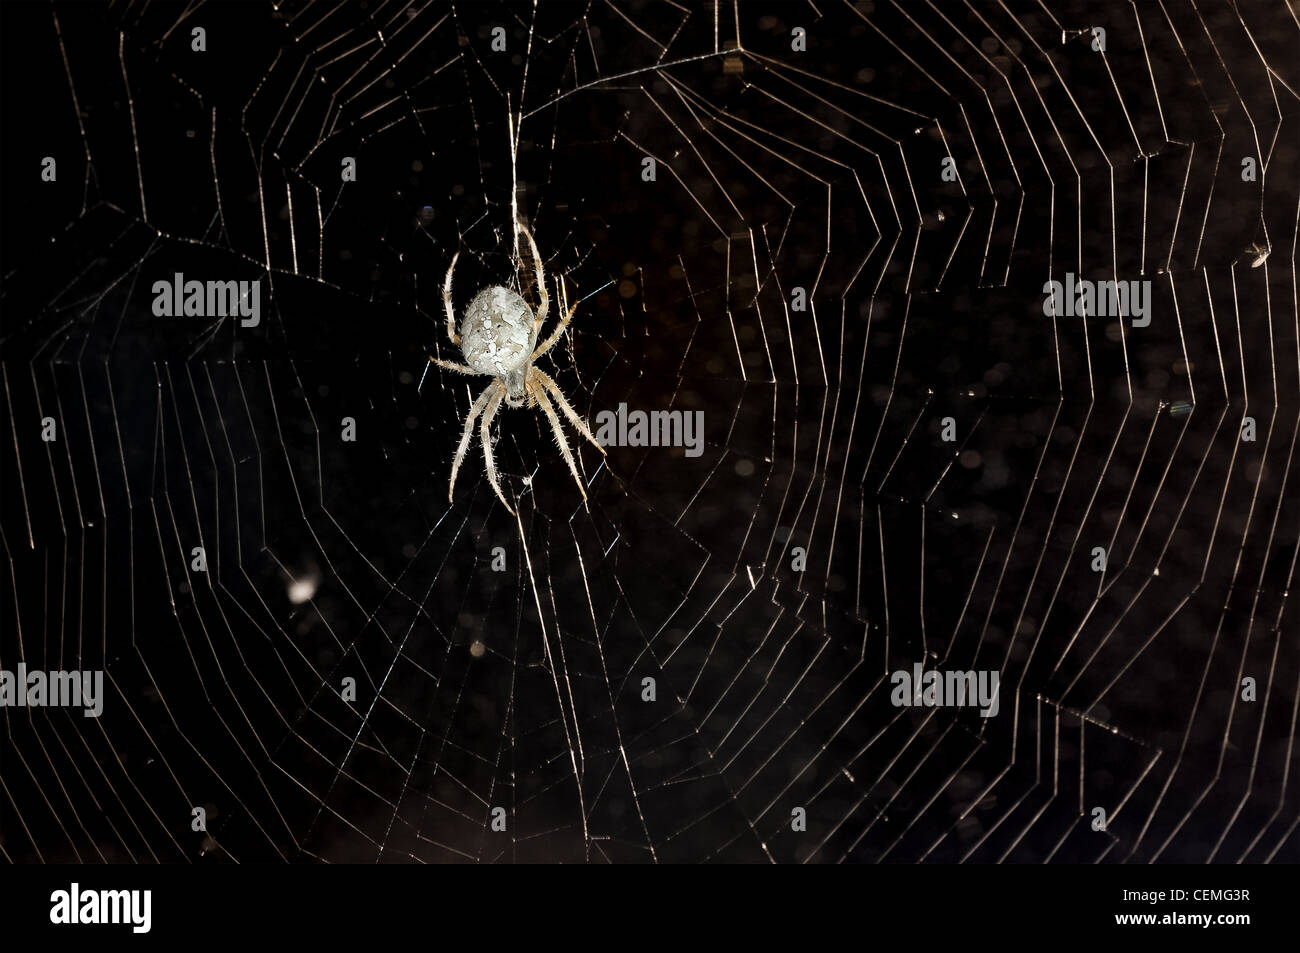 Spider on cobweb against dark night sky Stock Photo